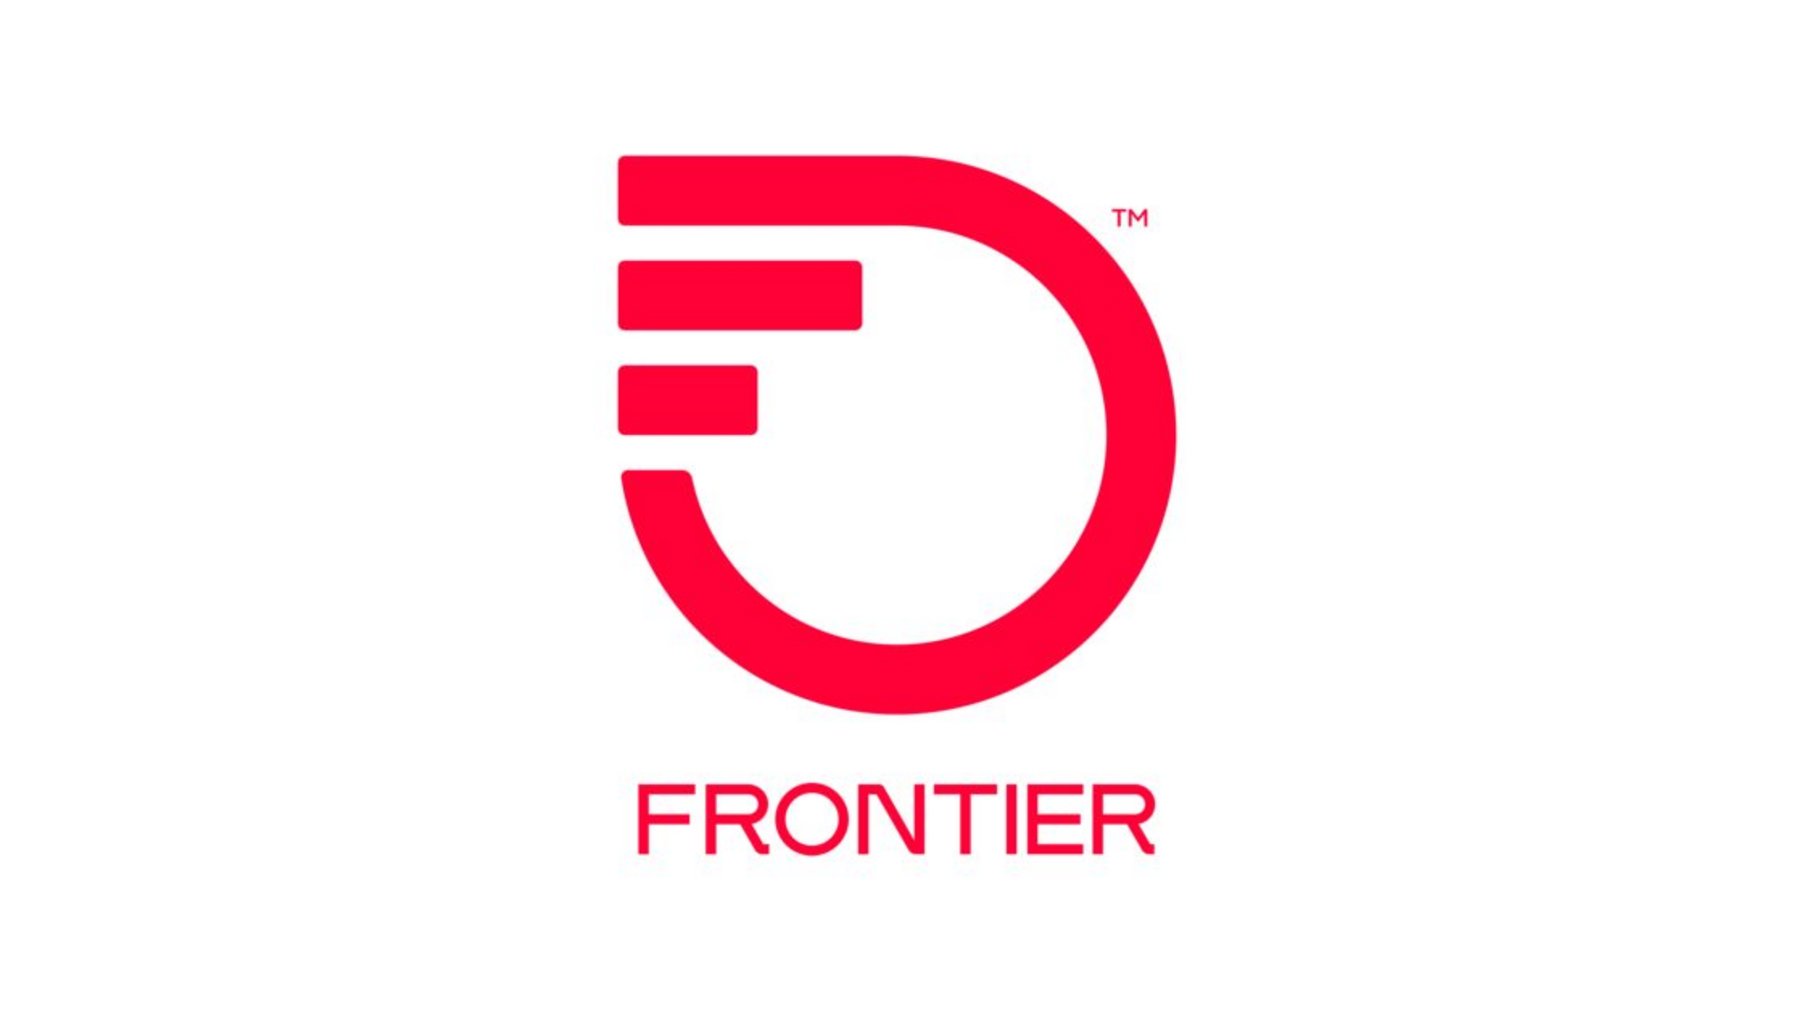 Communications provider Frontier unveils new branding Mobile Magazine